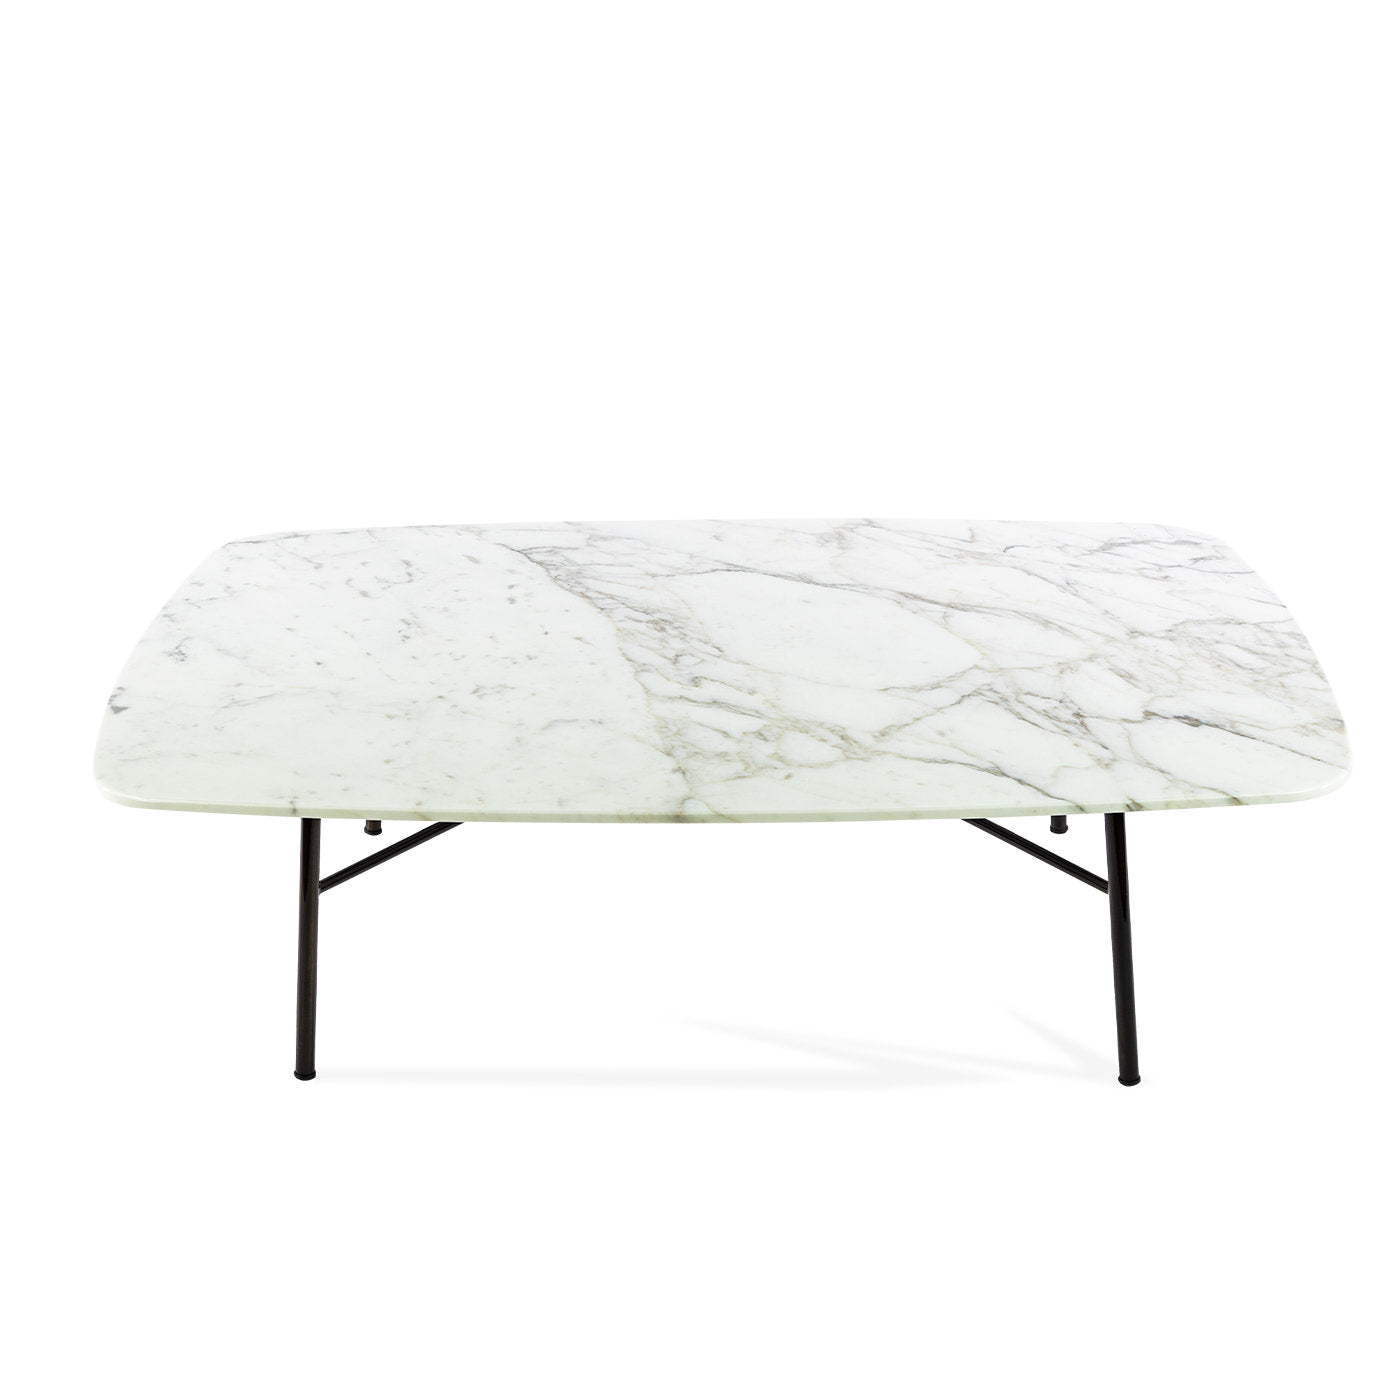 Yuki Rectangular Coffee Table with White Carrara Top # 2 by Ep Studio - Alternative view 1